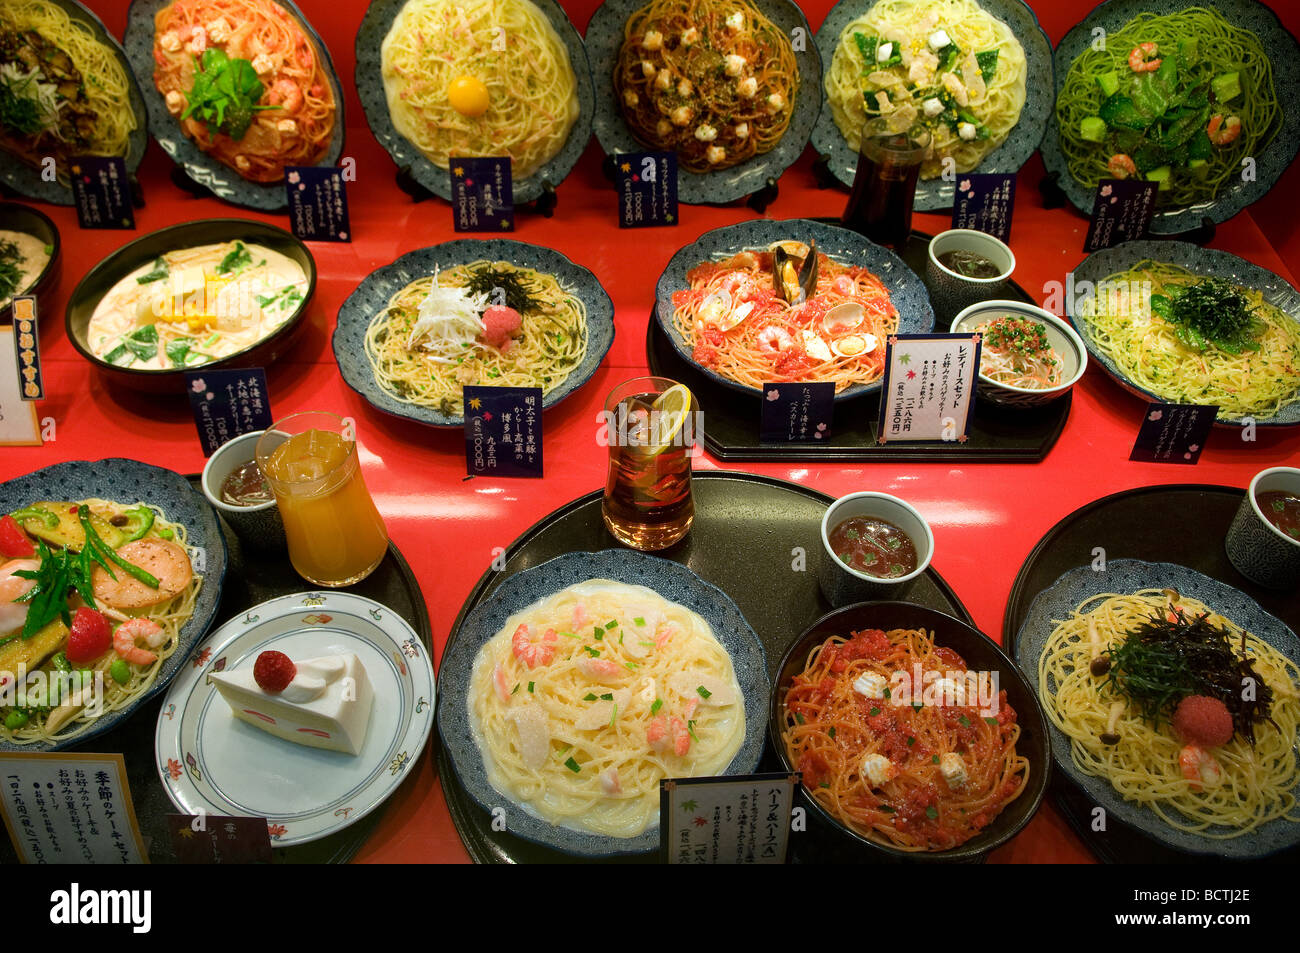 Food models made of plastic or wax known in Japan as 'shokuhin sampuru' displayed in a restaurant window in Tokyo Japan Stock Photo